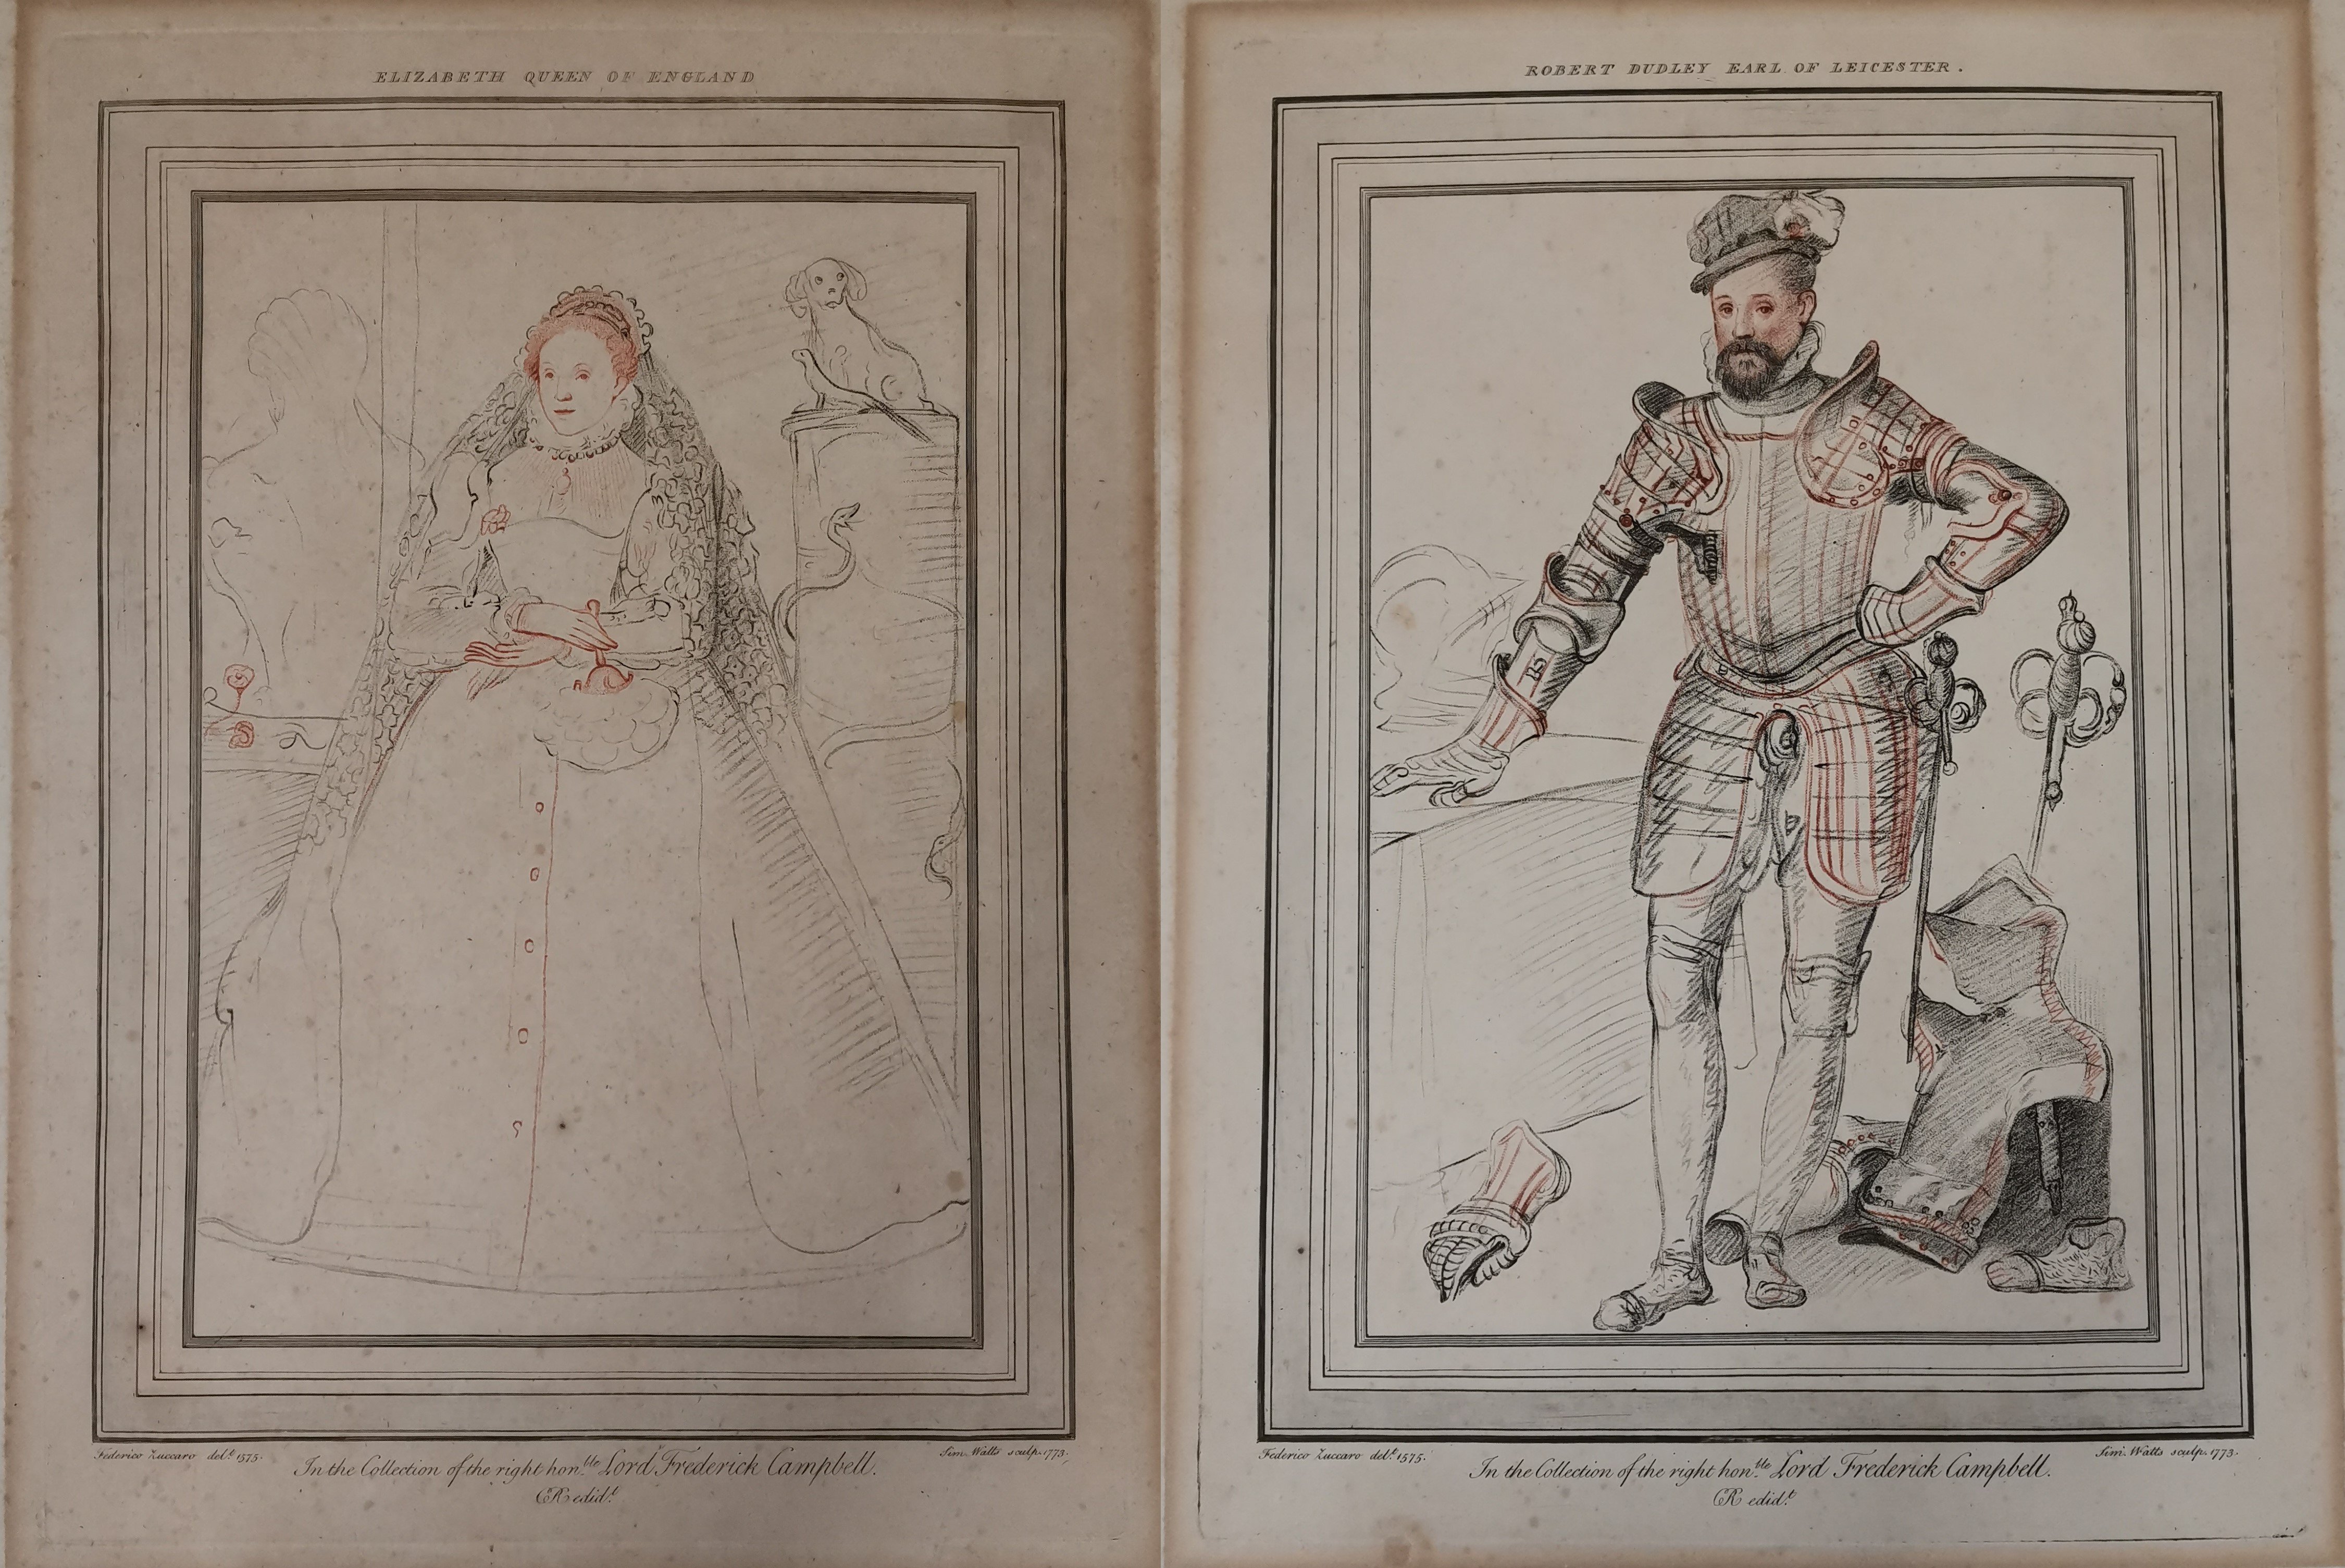 Image: Engravings of Elizabeth I and Robert Dudley